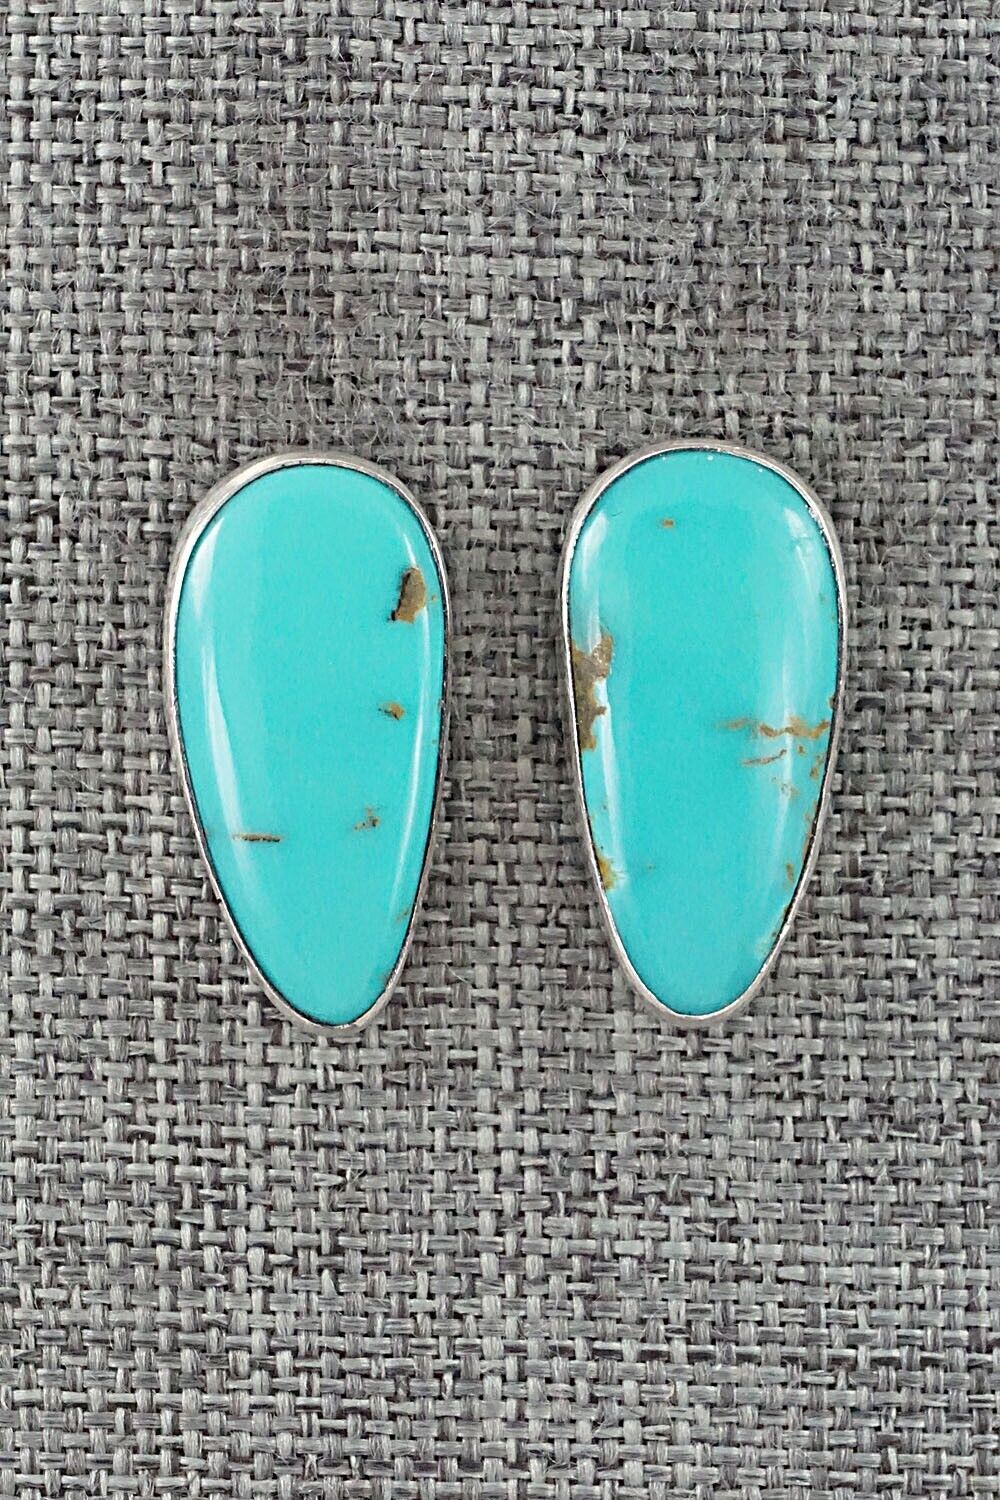 Turquoise & Sterling Silver Earrings - Marco Begaye